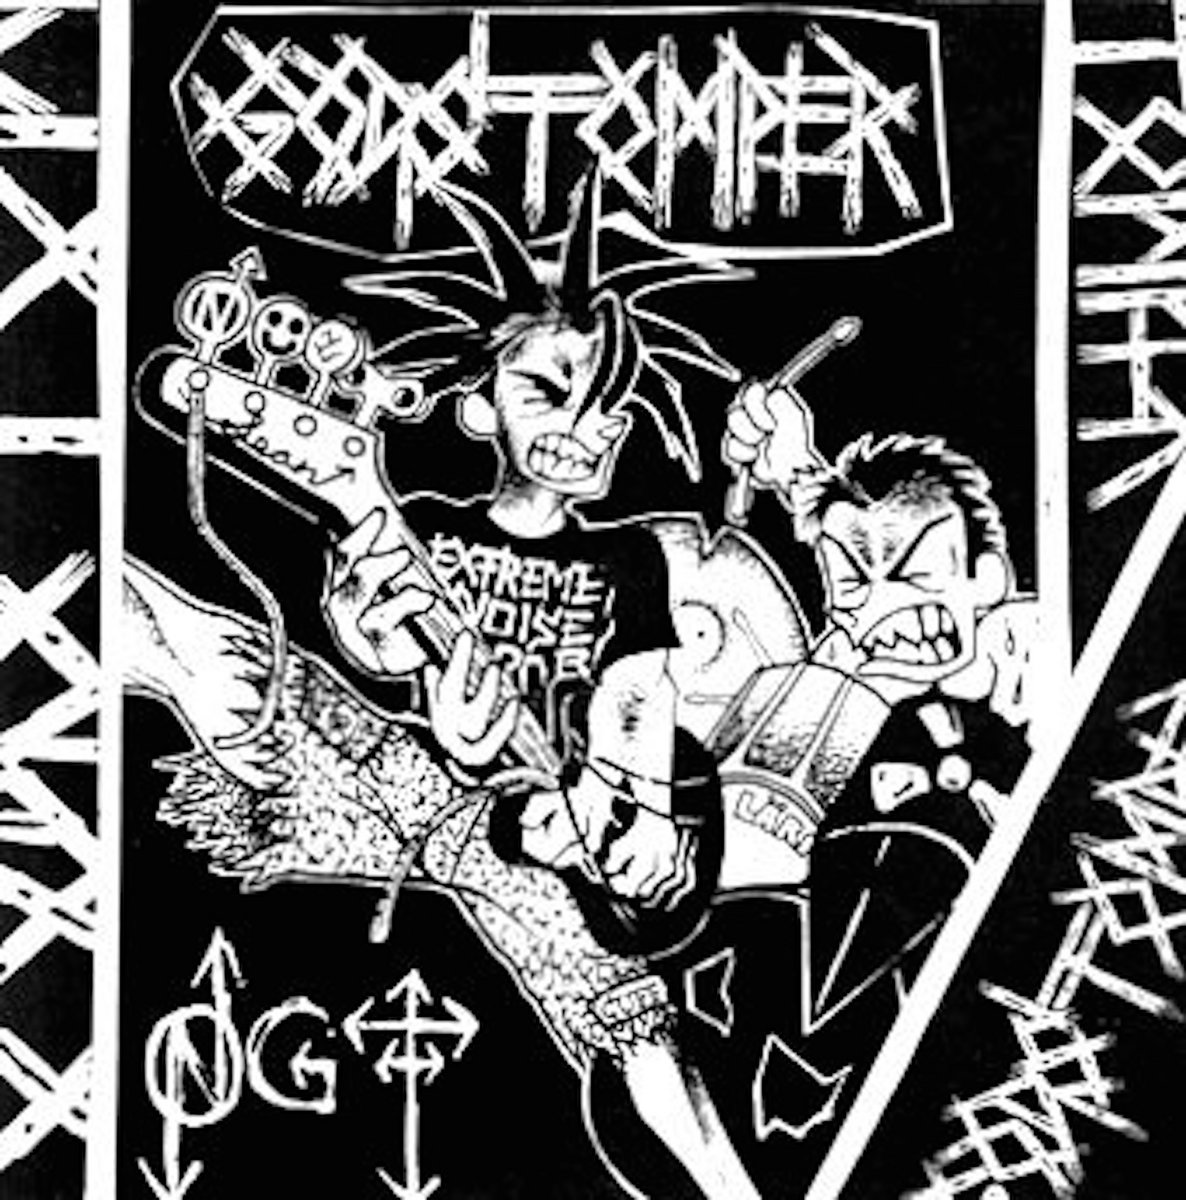 GODSTOMPER - N.G.T. EP cover 